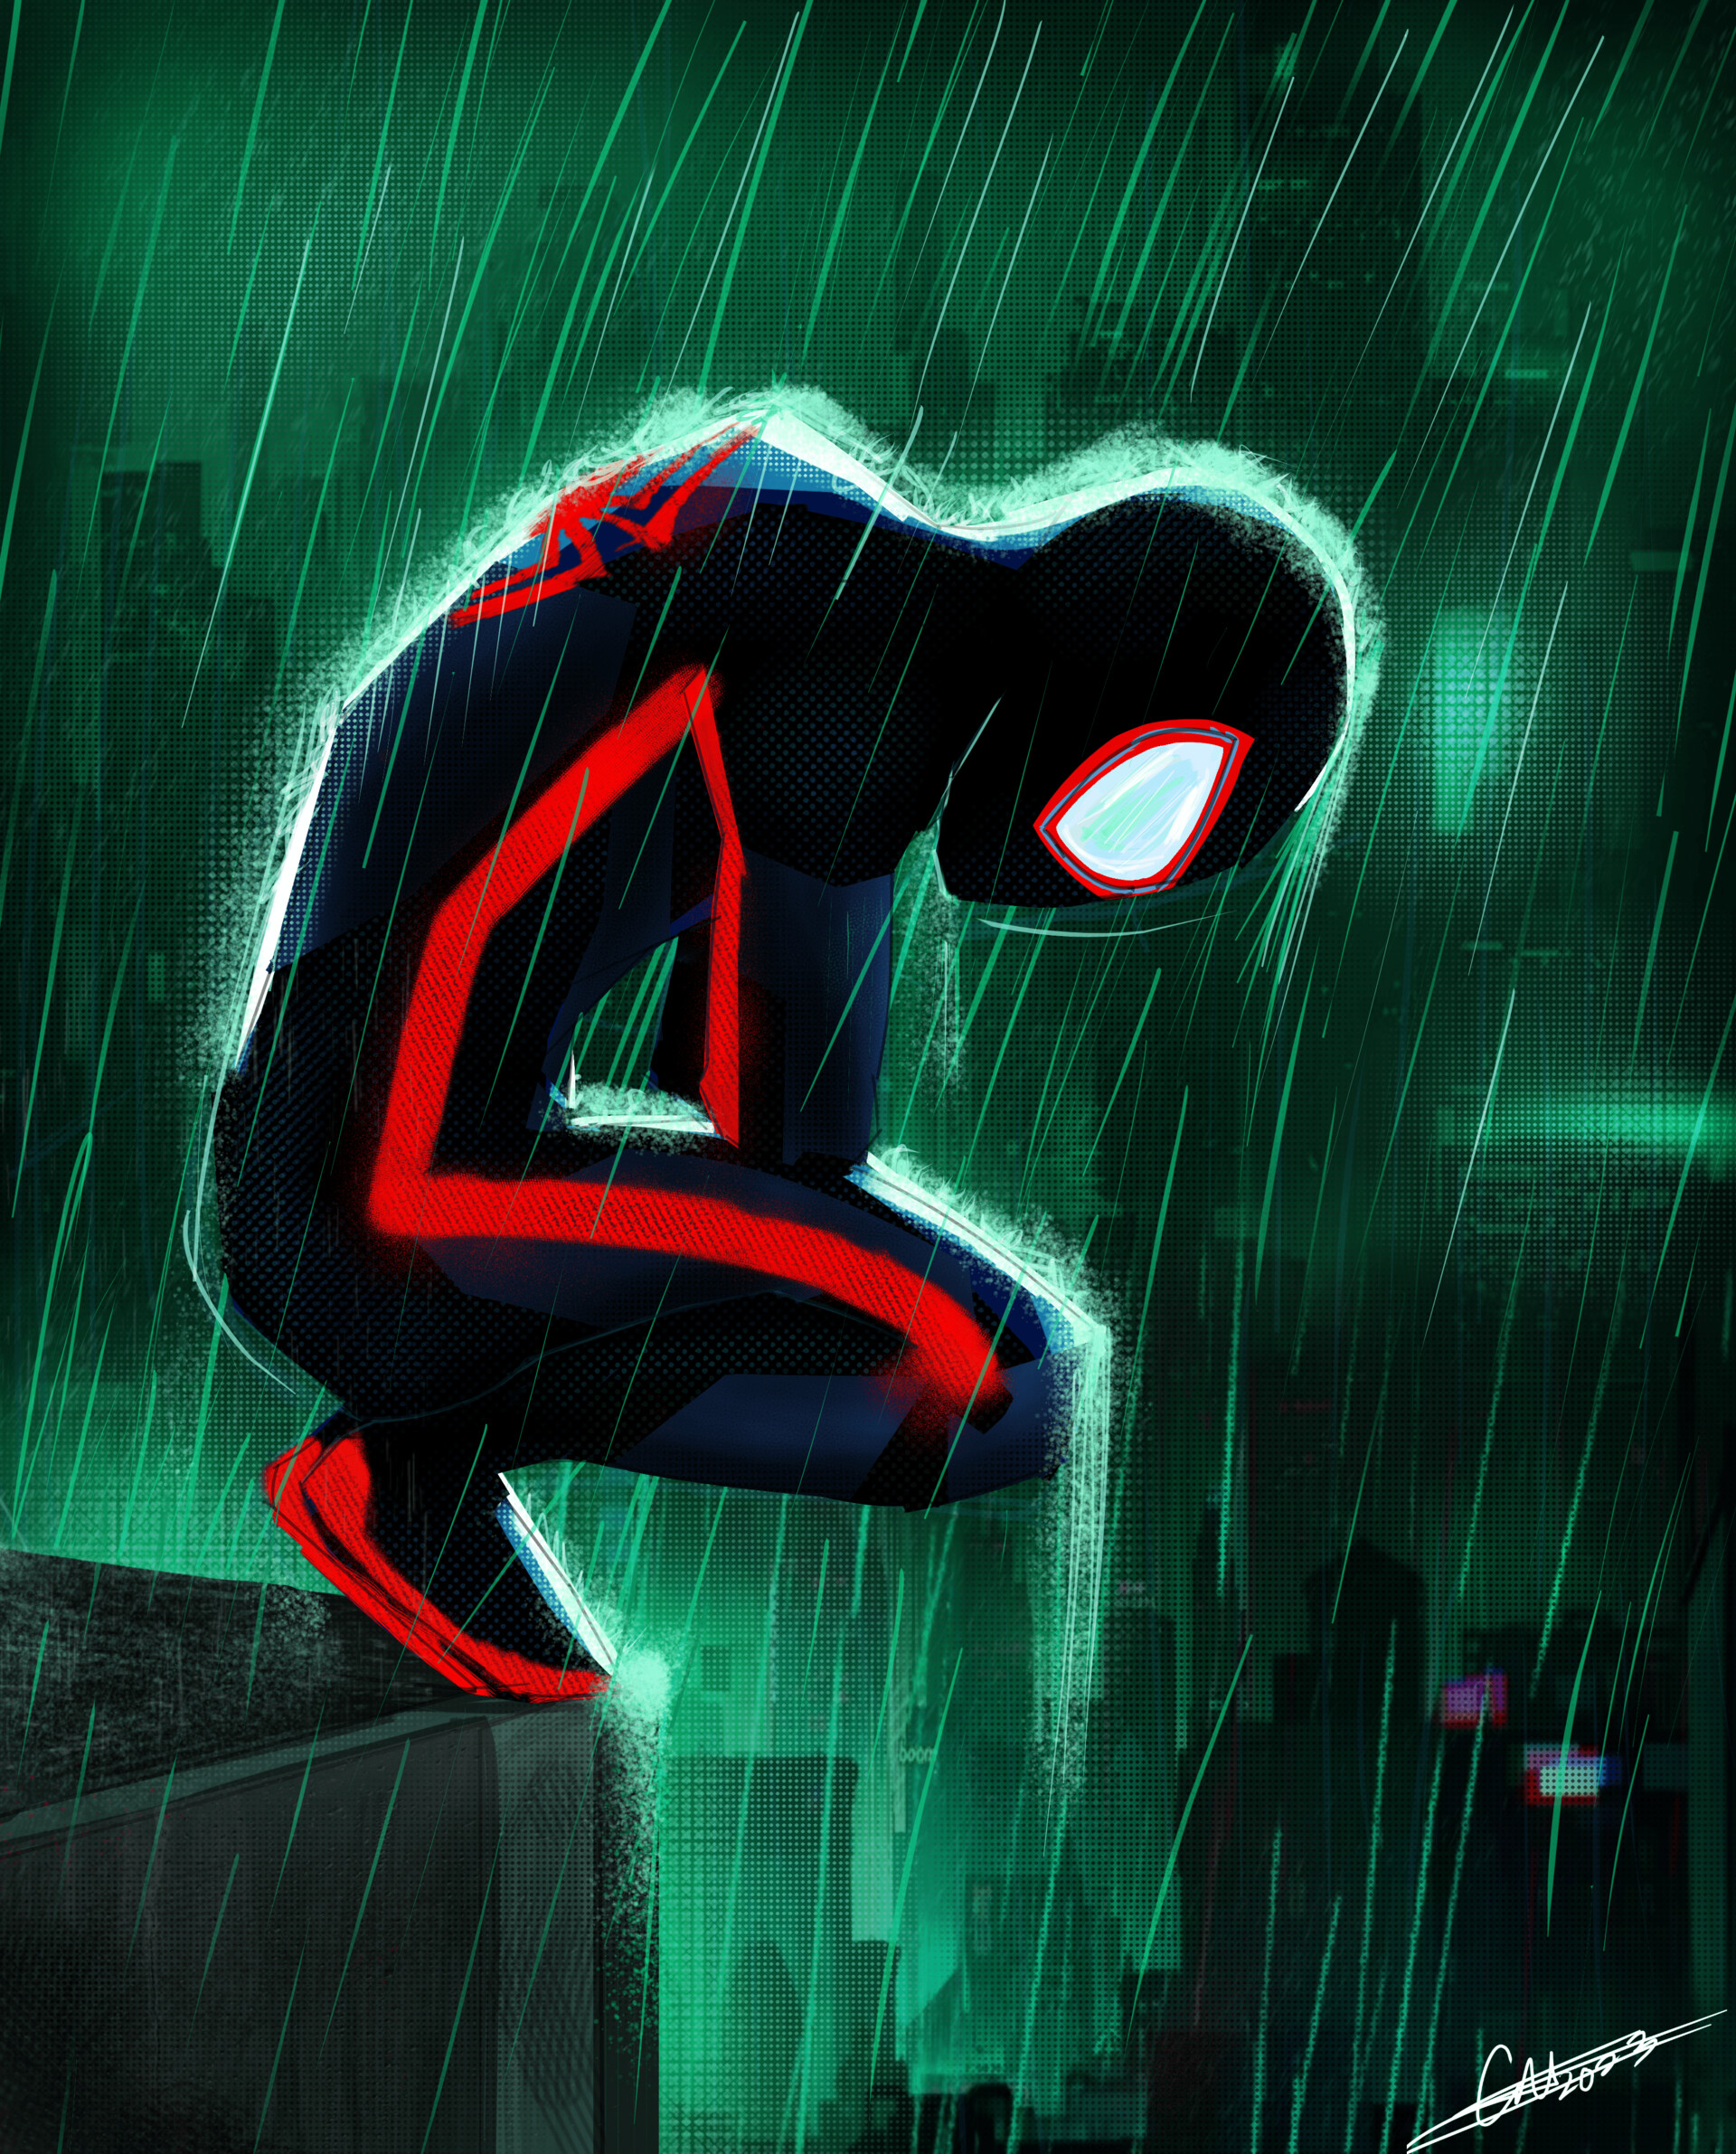 ArtStation - Spiderman Across the spider verse